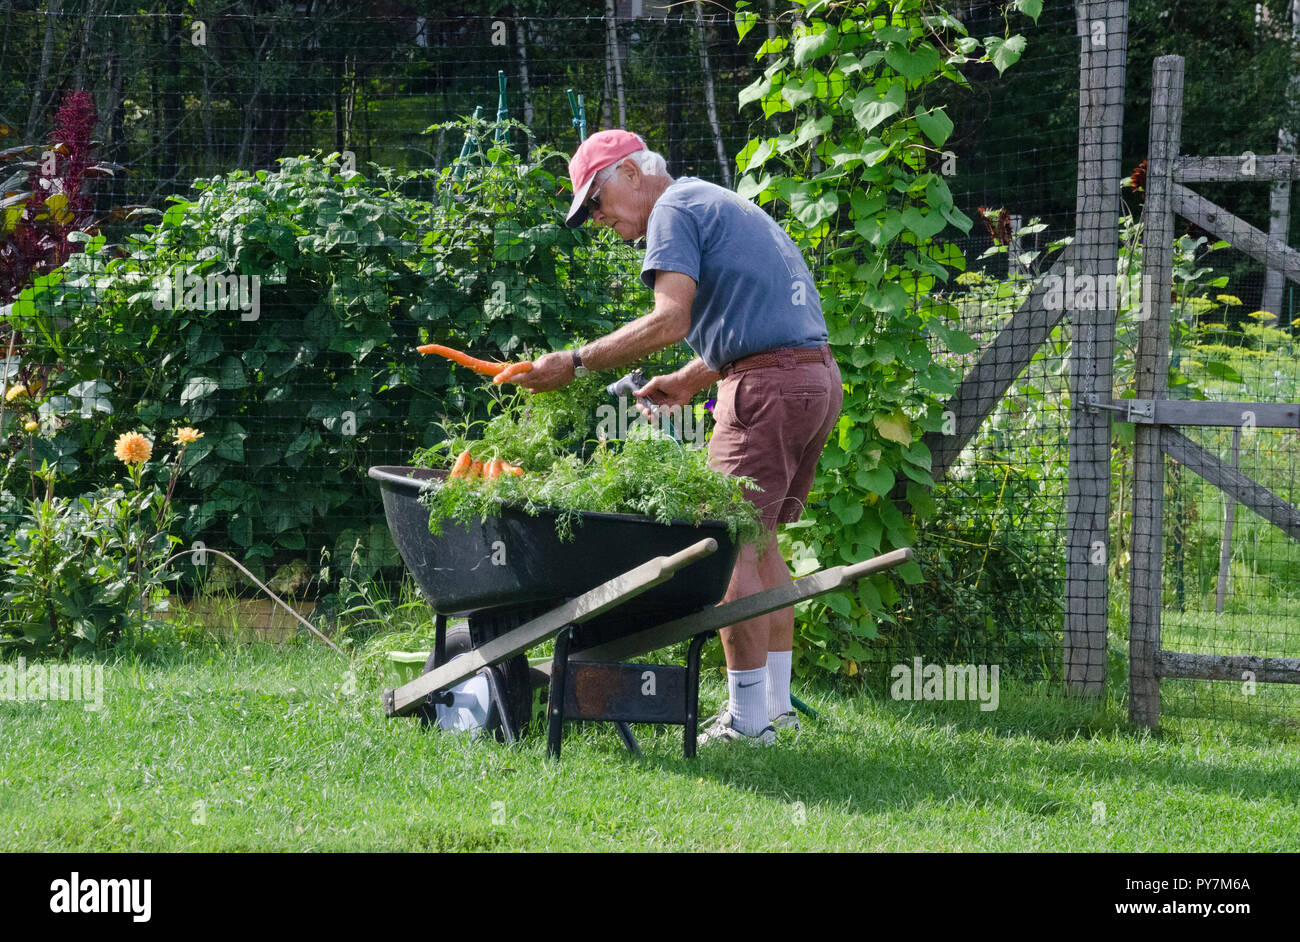 Man washing carrots in the community garden Stock Photo